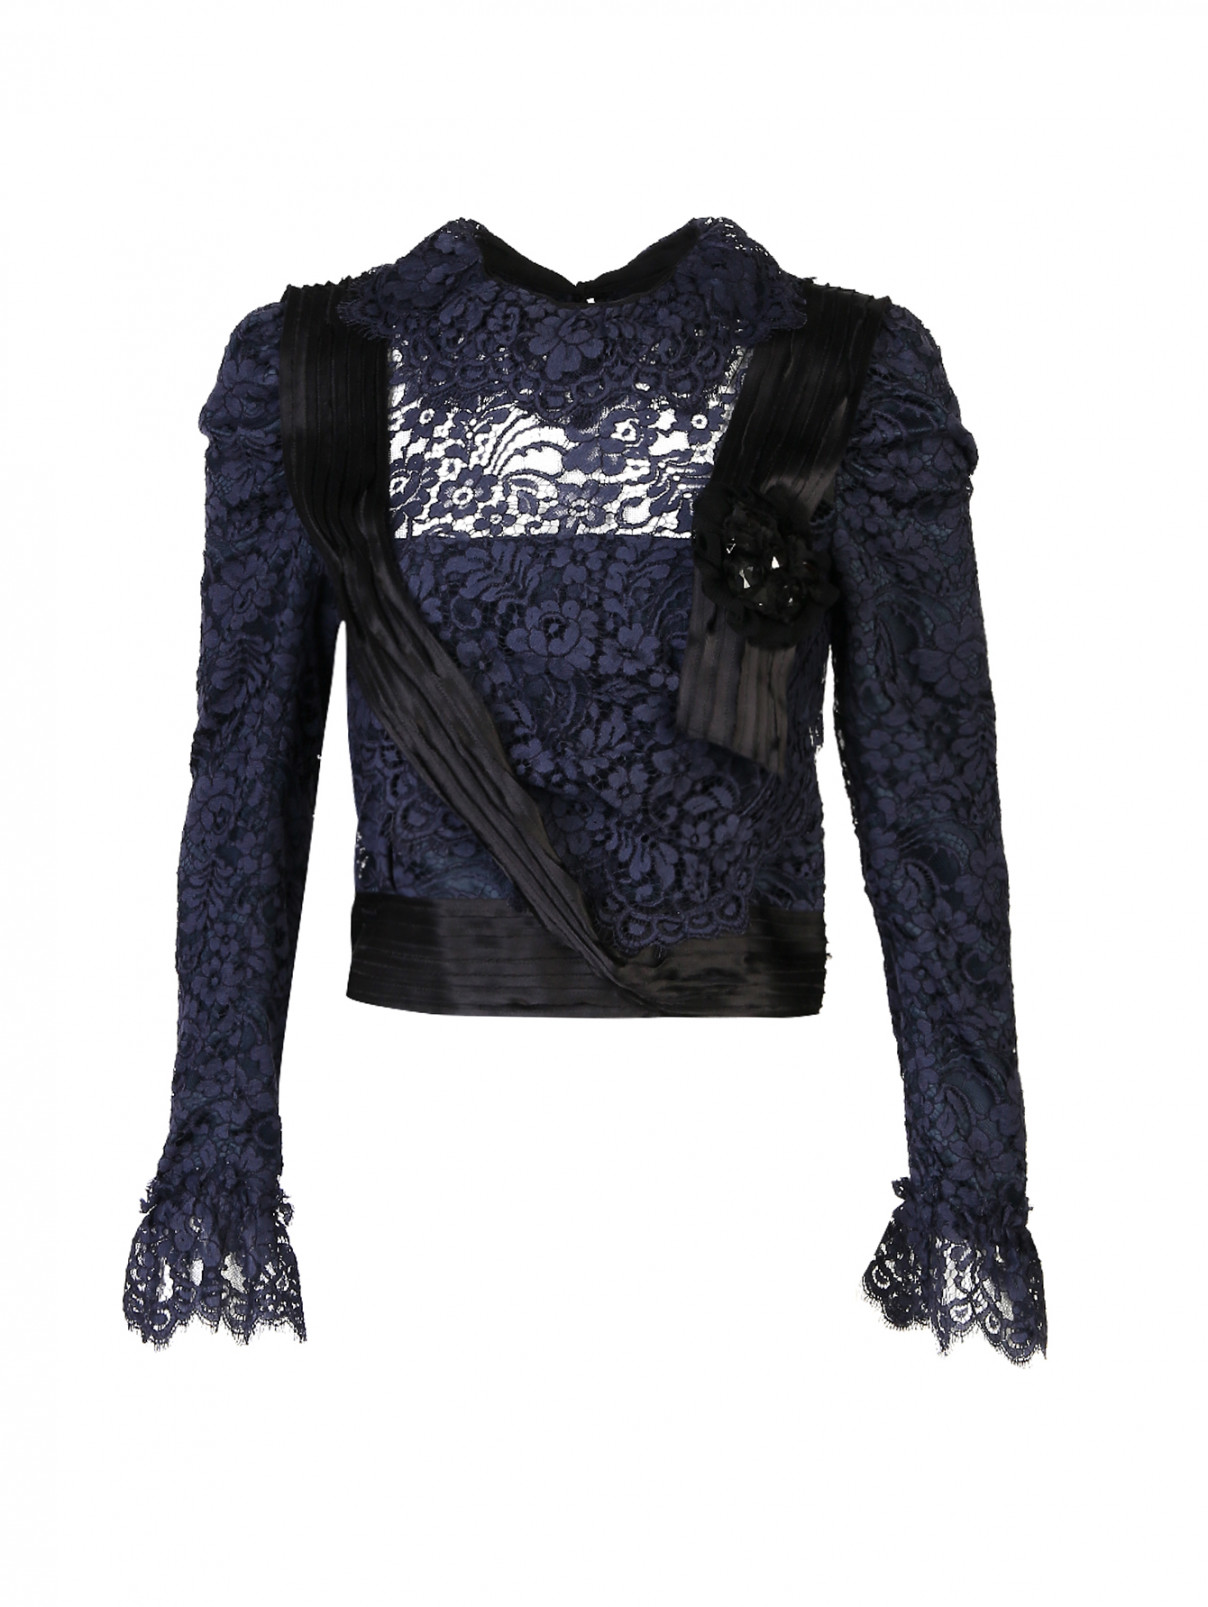 Кружевная блуза с декором Dolce & Gabbana  –  Общий вид  – Цвет:  Синий